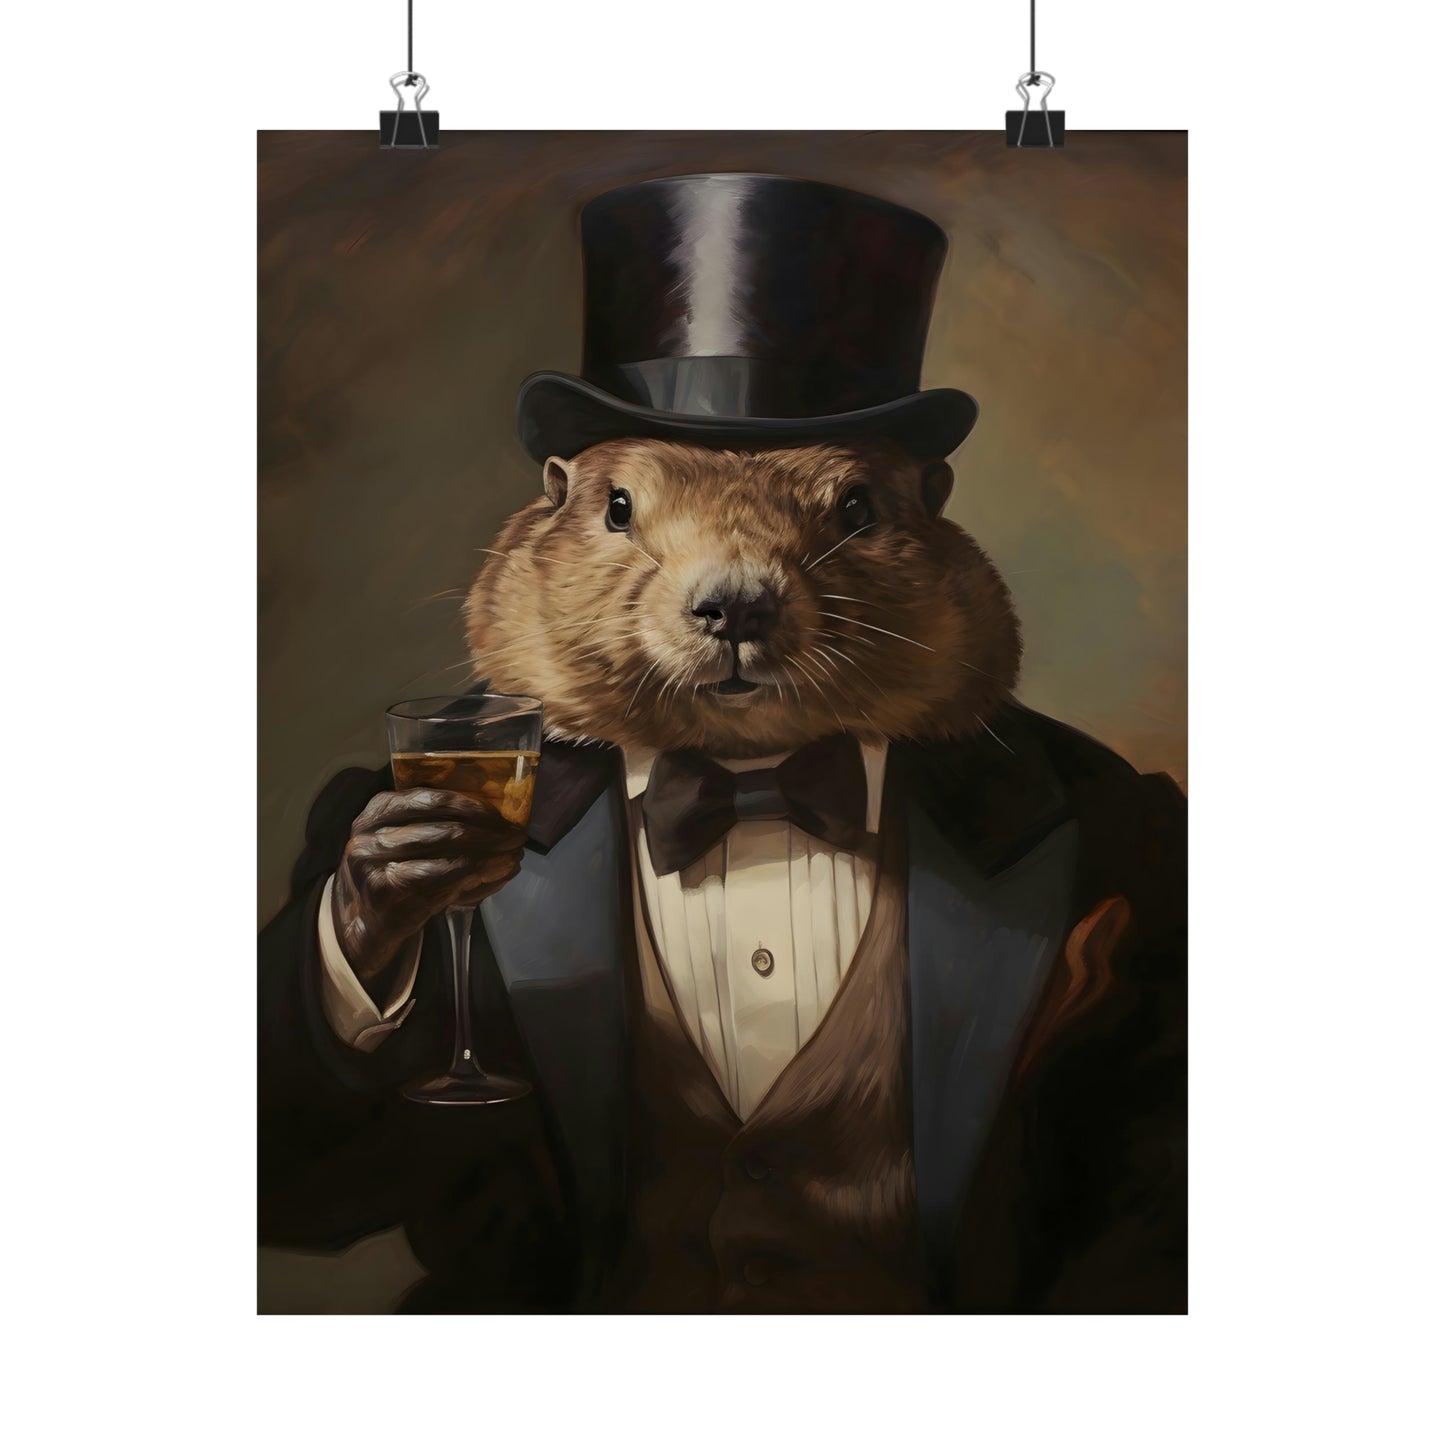 Dapper Beaver Poster